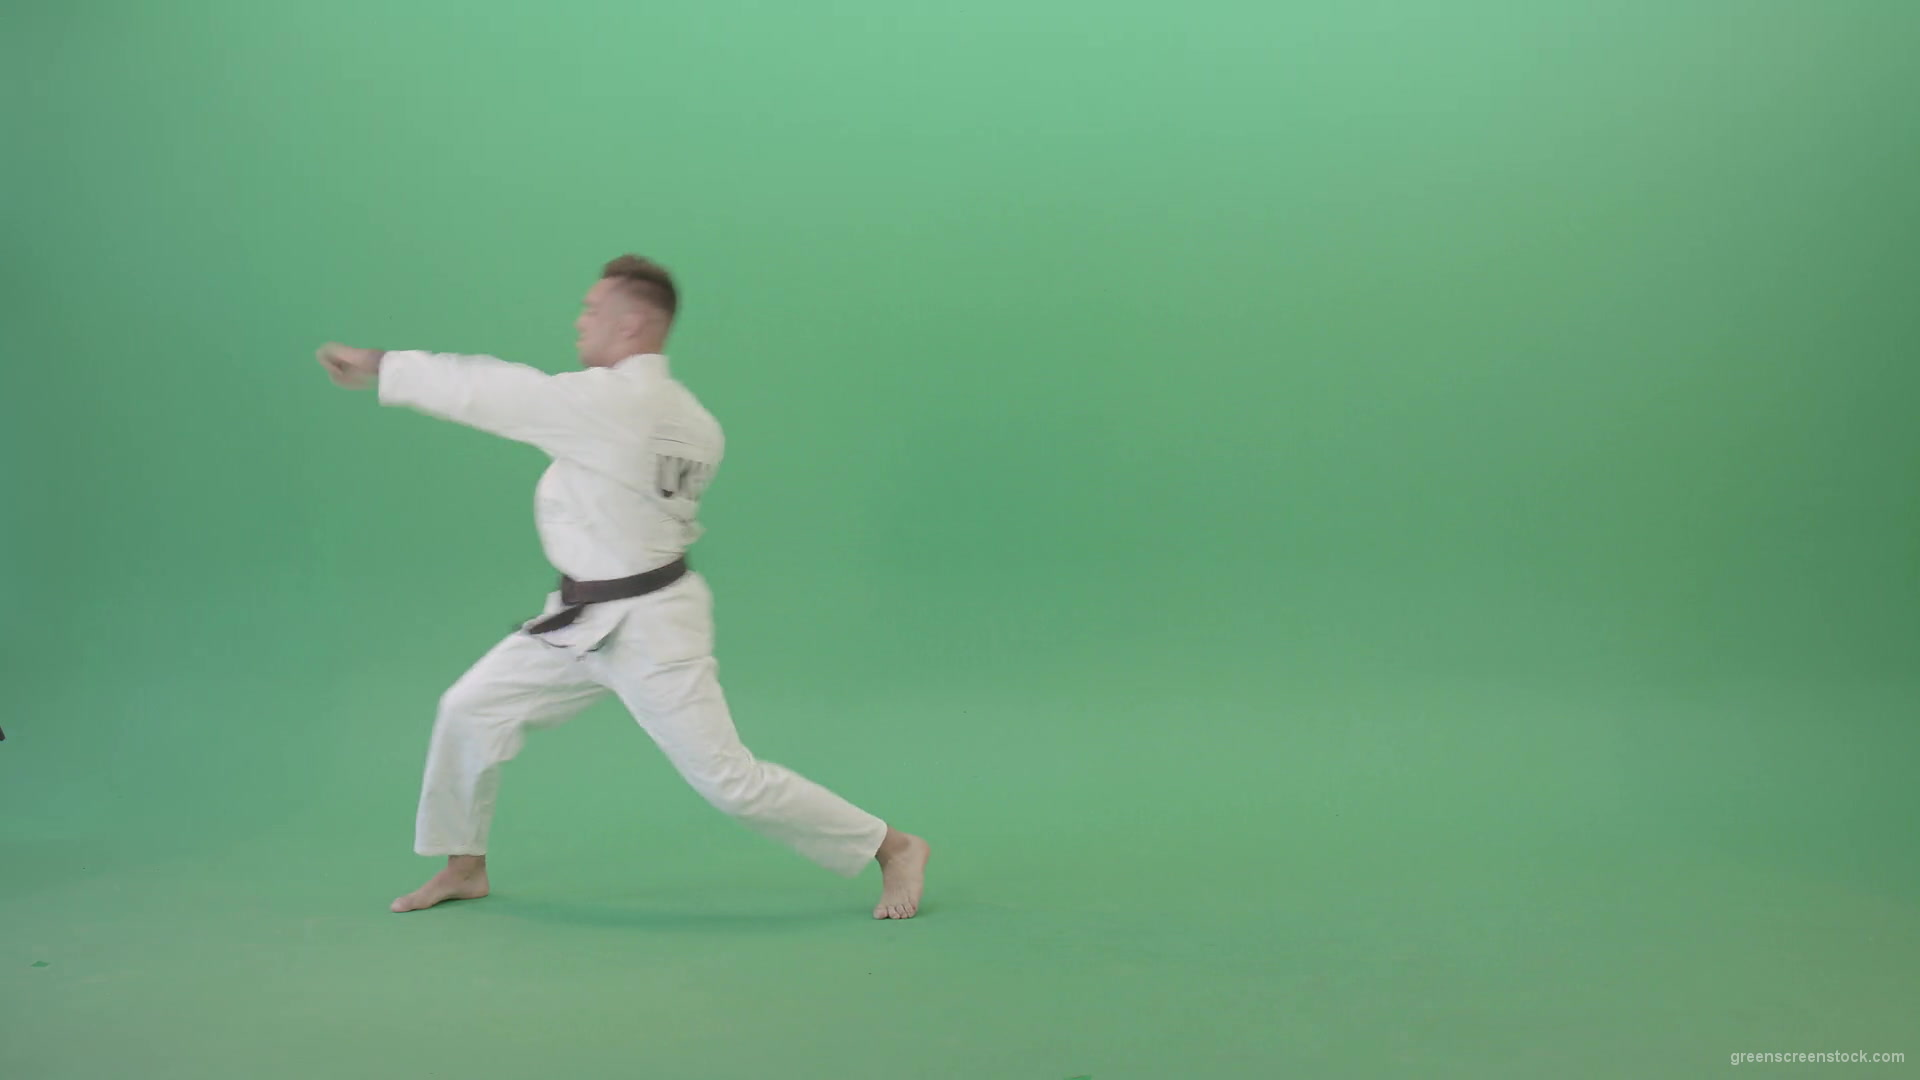 Karate-Sport-man-make-side-kick-isolated-on-green-screen-4K-Video-Footage-1920_006 Green Screen Stock